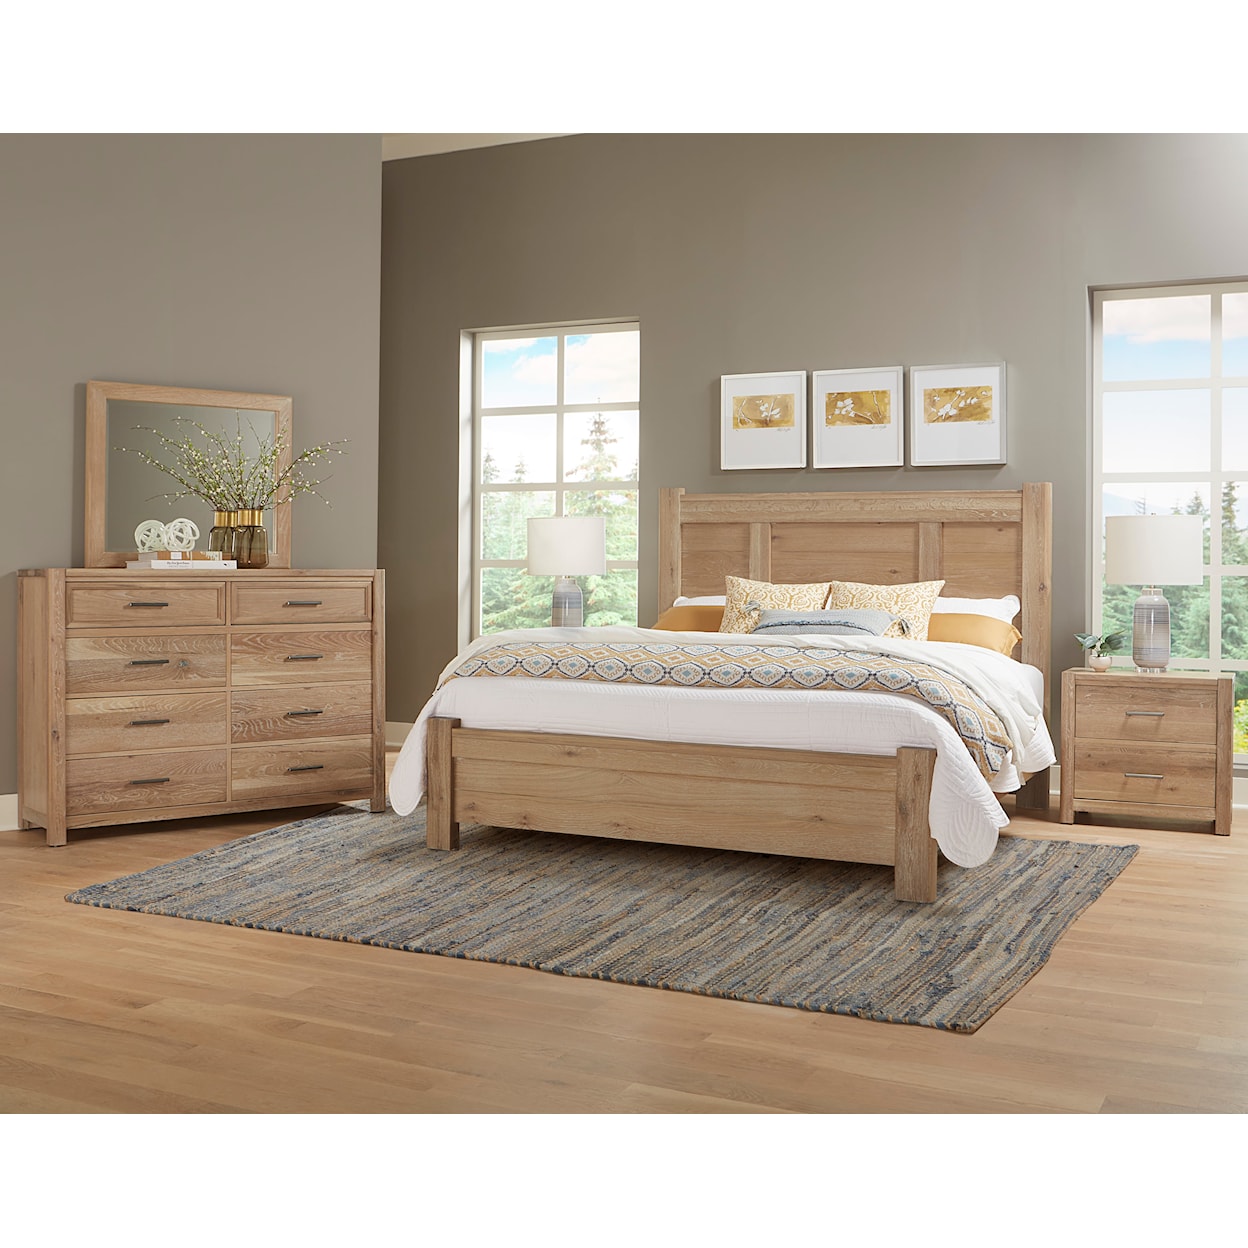 Laurel Mercantile Co. Crafted Oak California King Bedroom Set